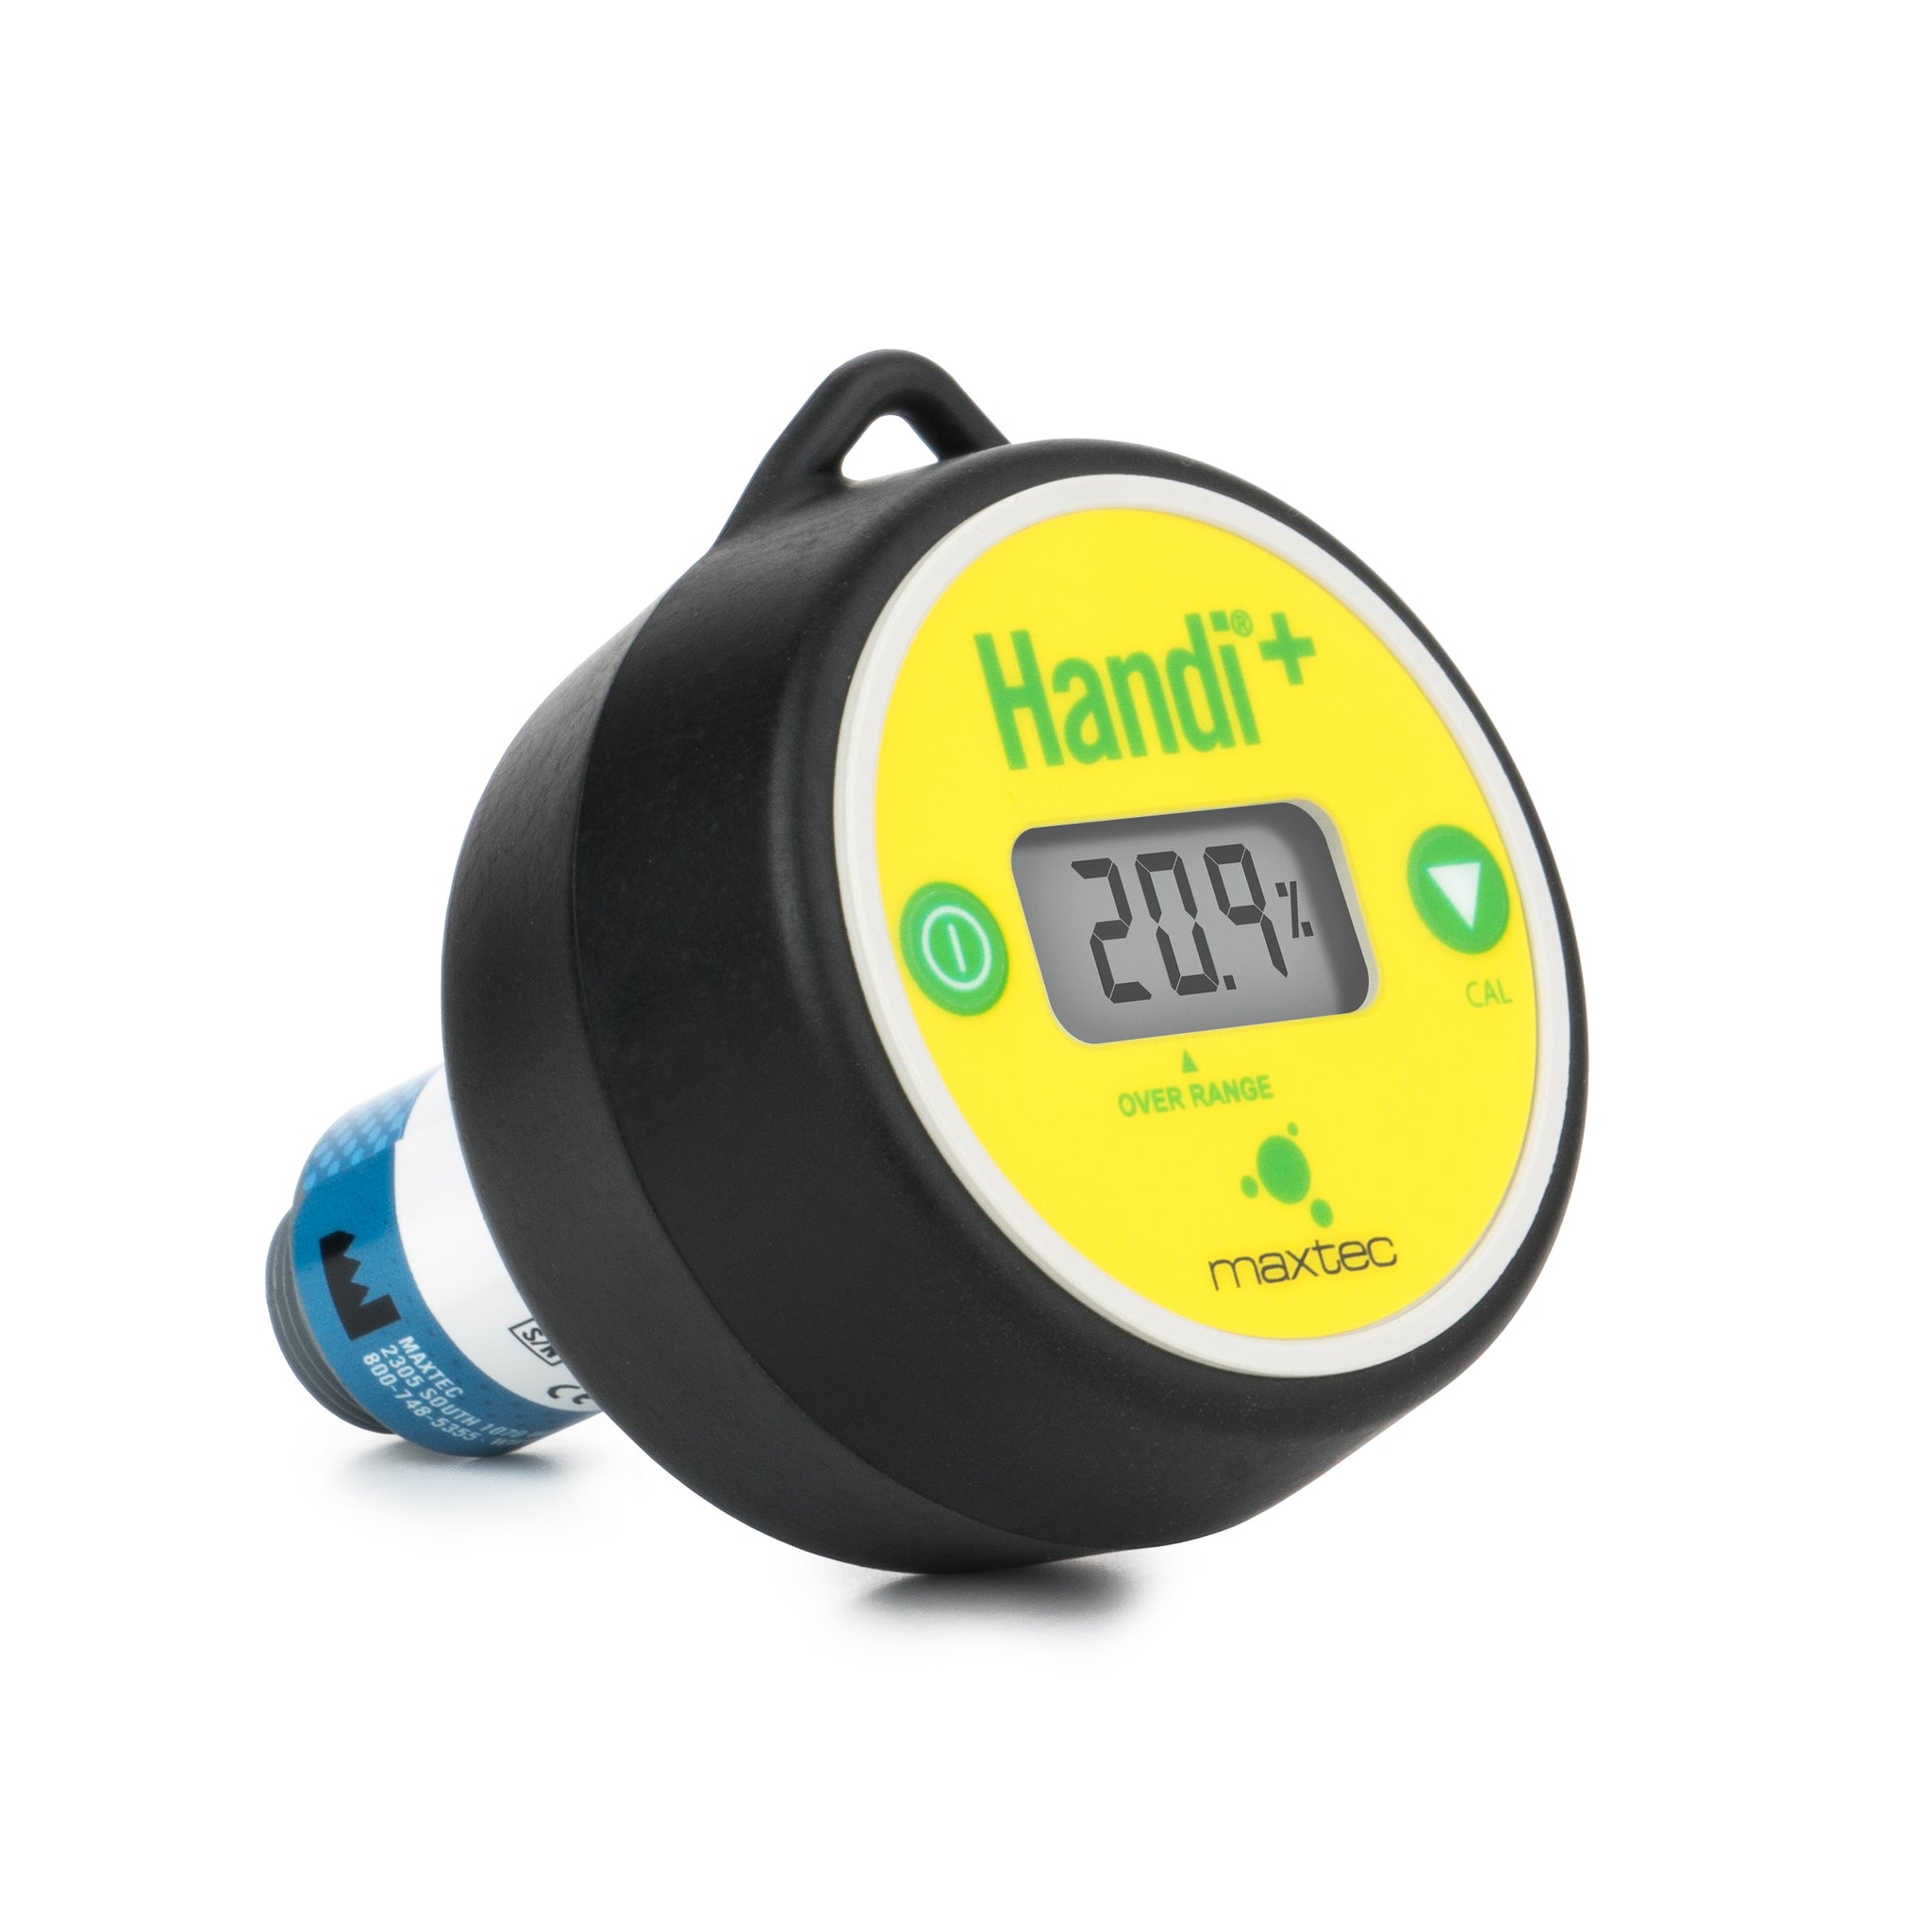 Handi+ Scuba Oxygen Analyser / Meter